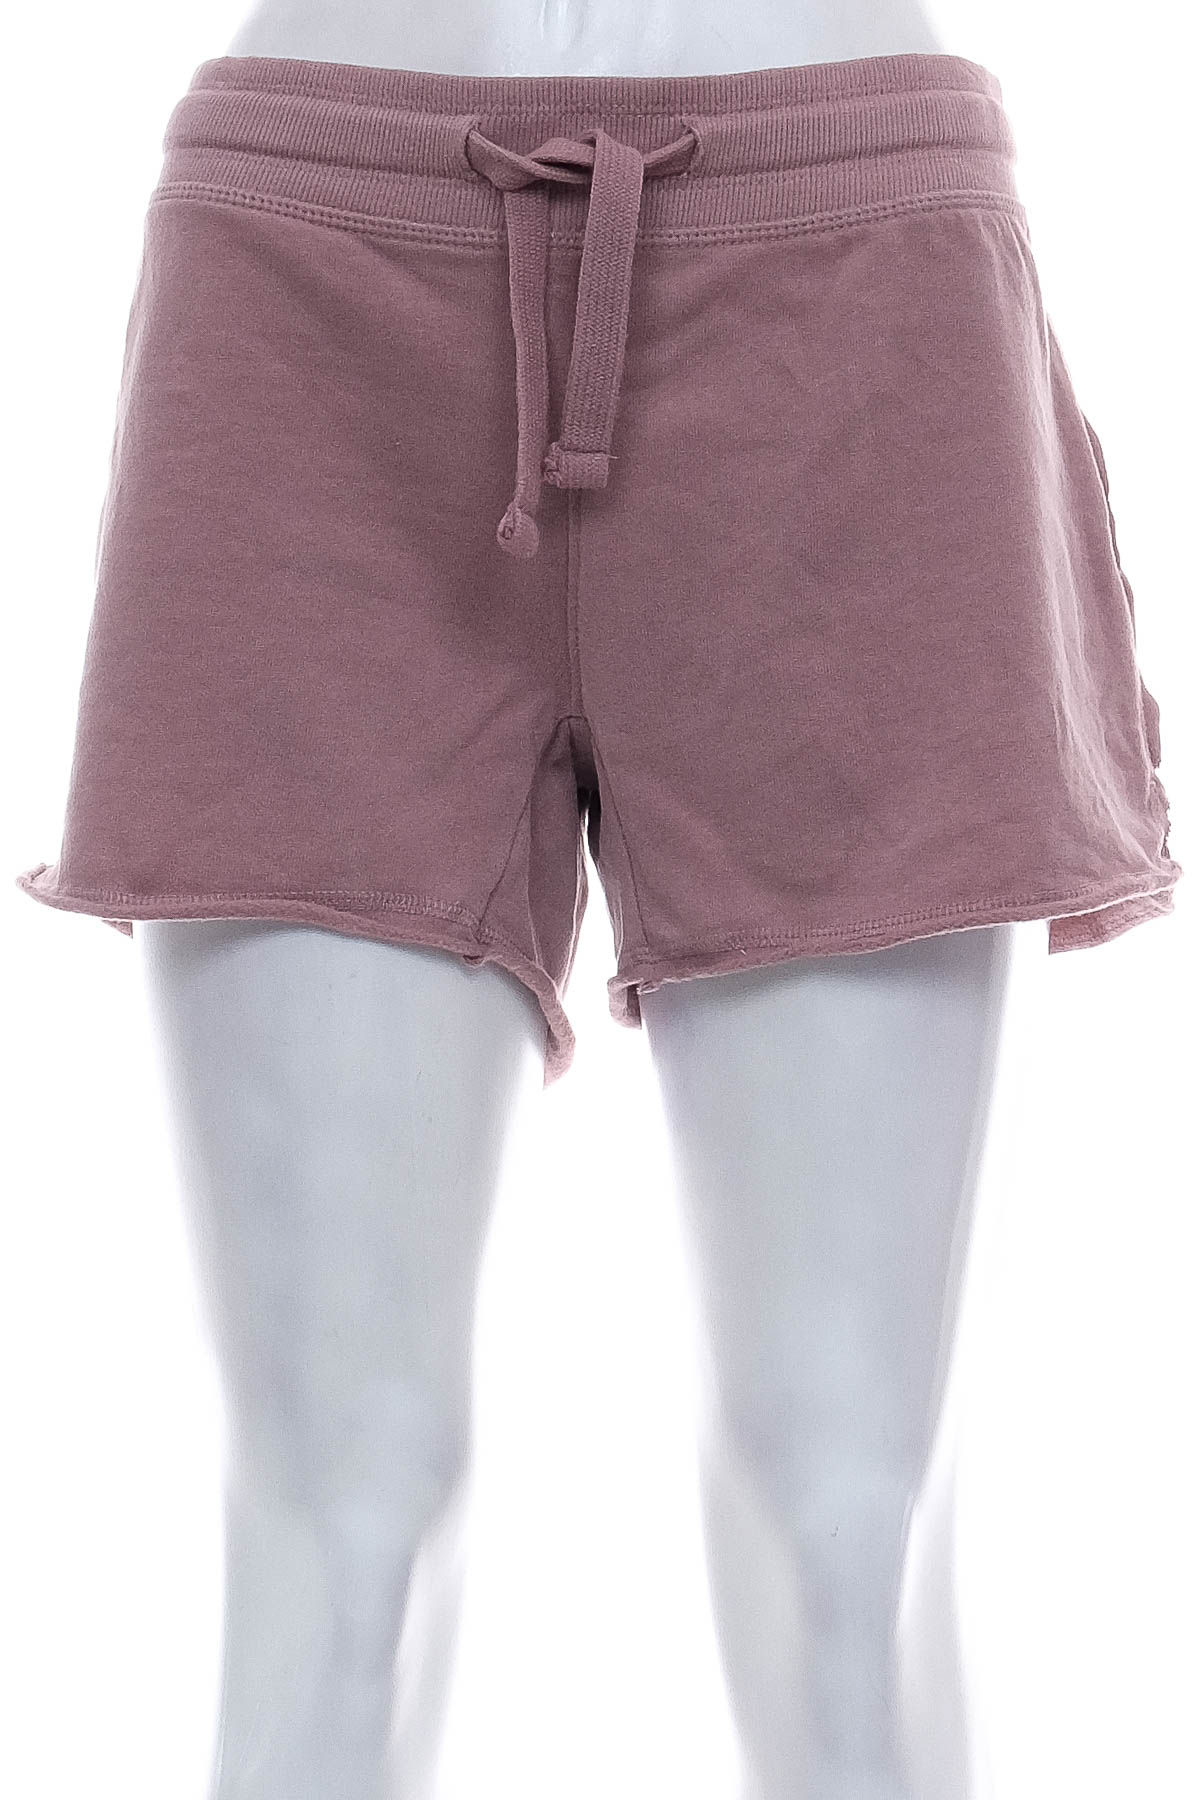 Female shorts - Crane - 0